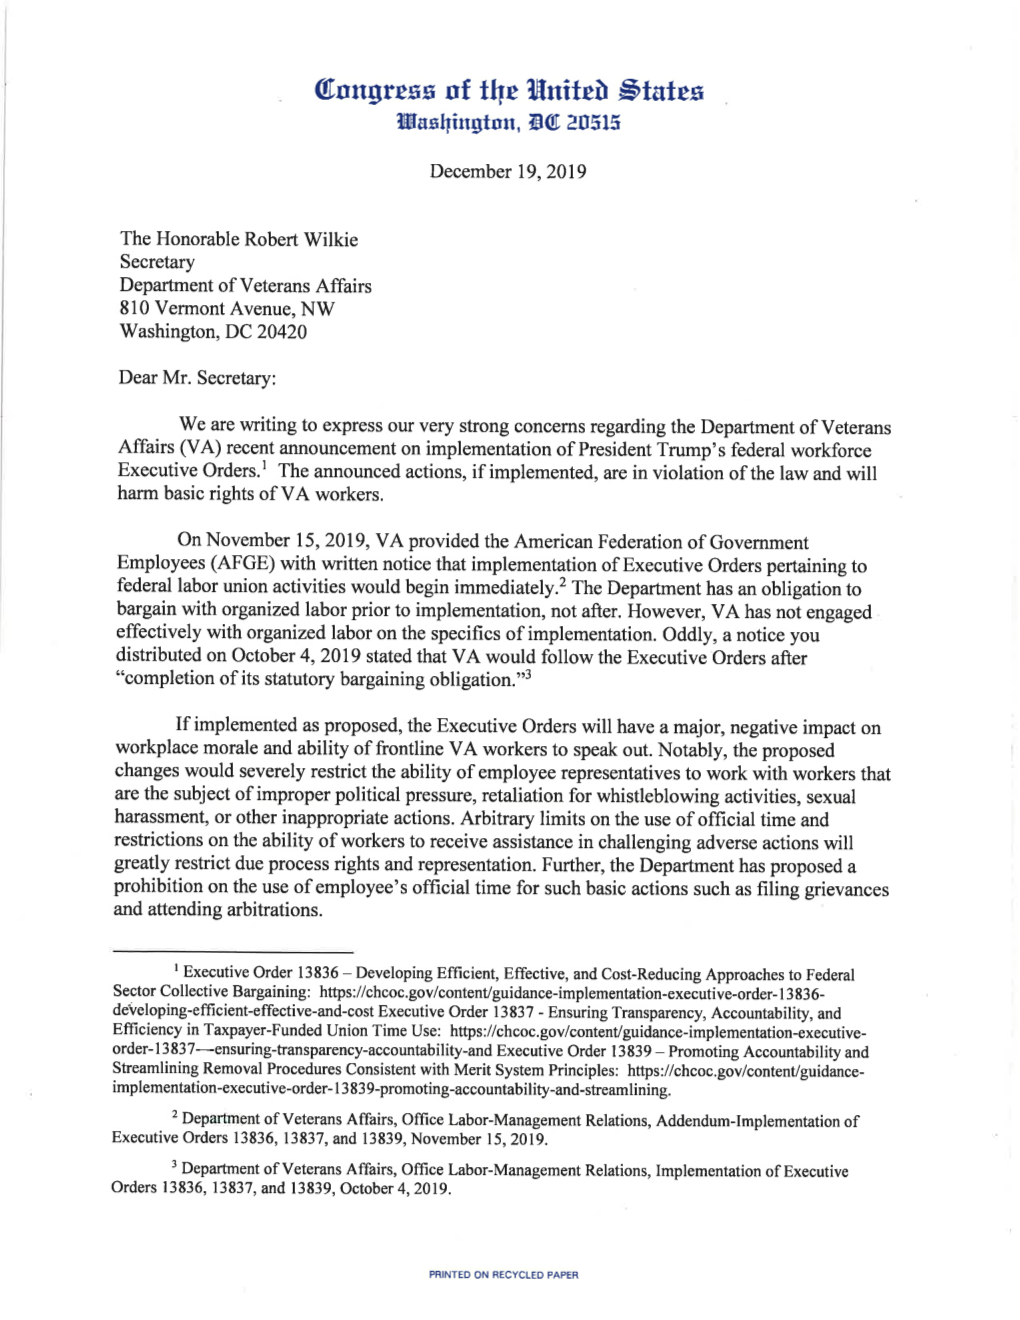 Letter from Members of House of Representatives to Department of Veterans Affairs Secretary Robert Wilke, January 5,2019